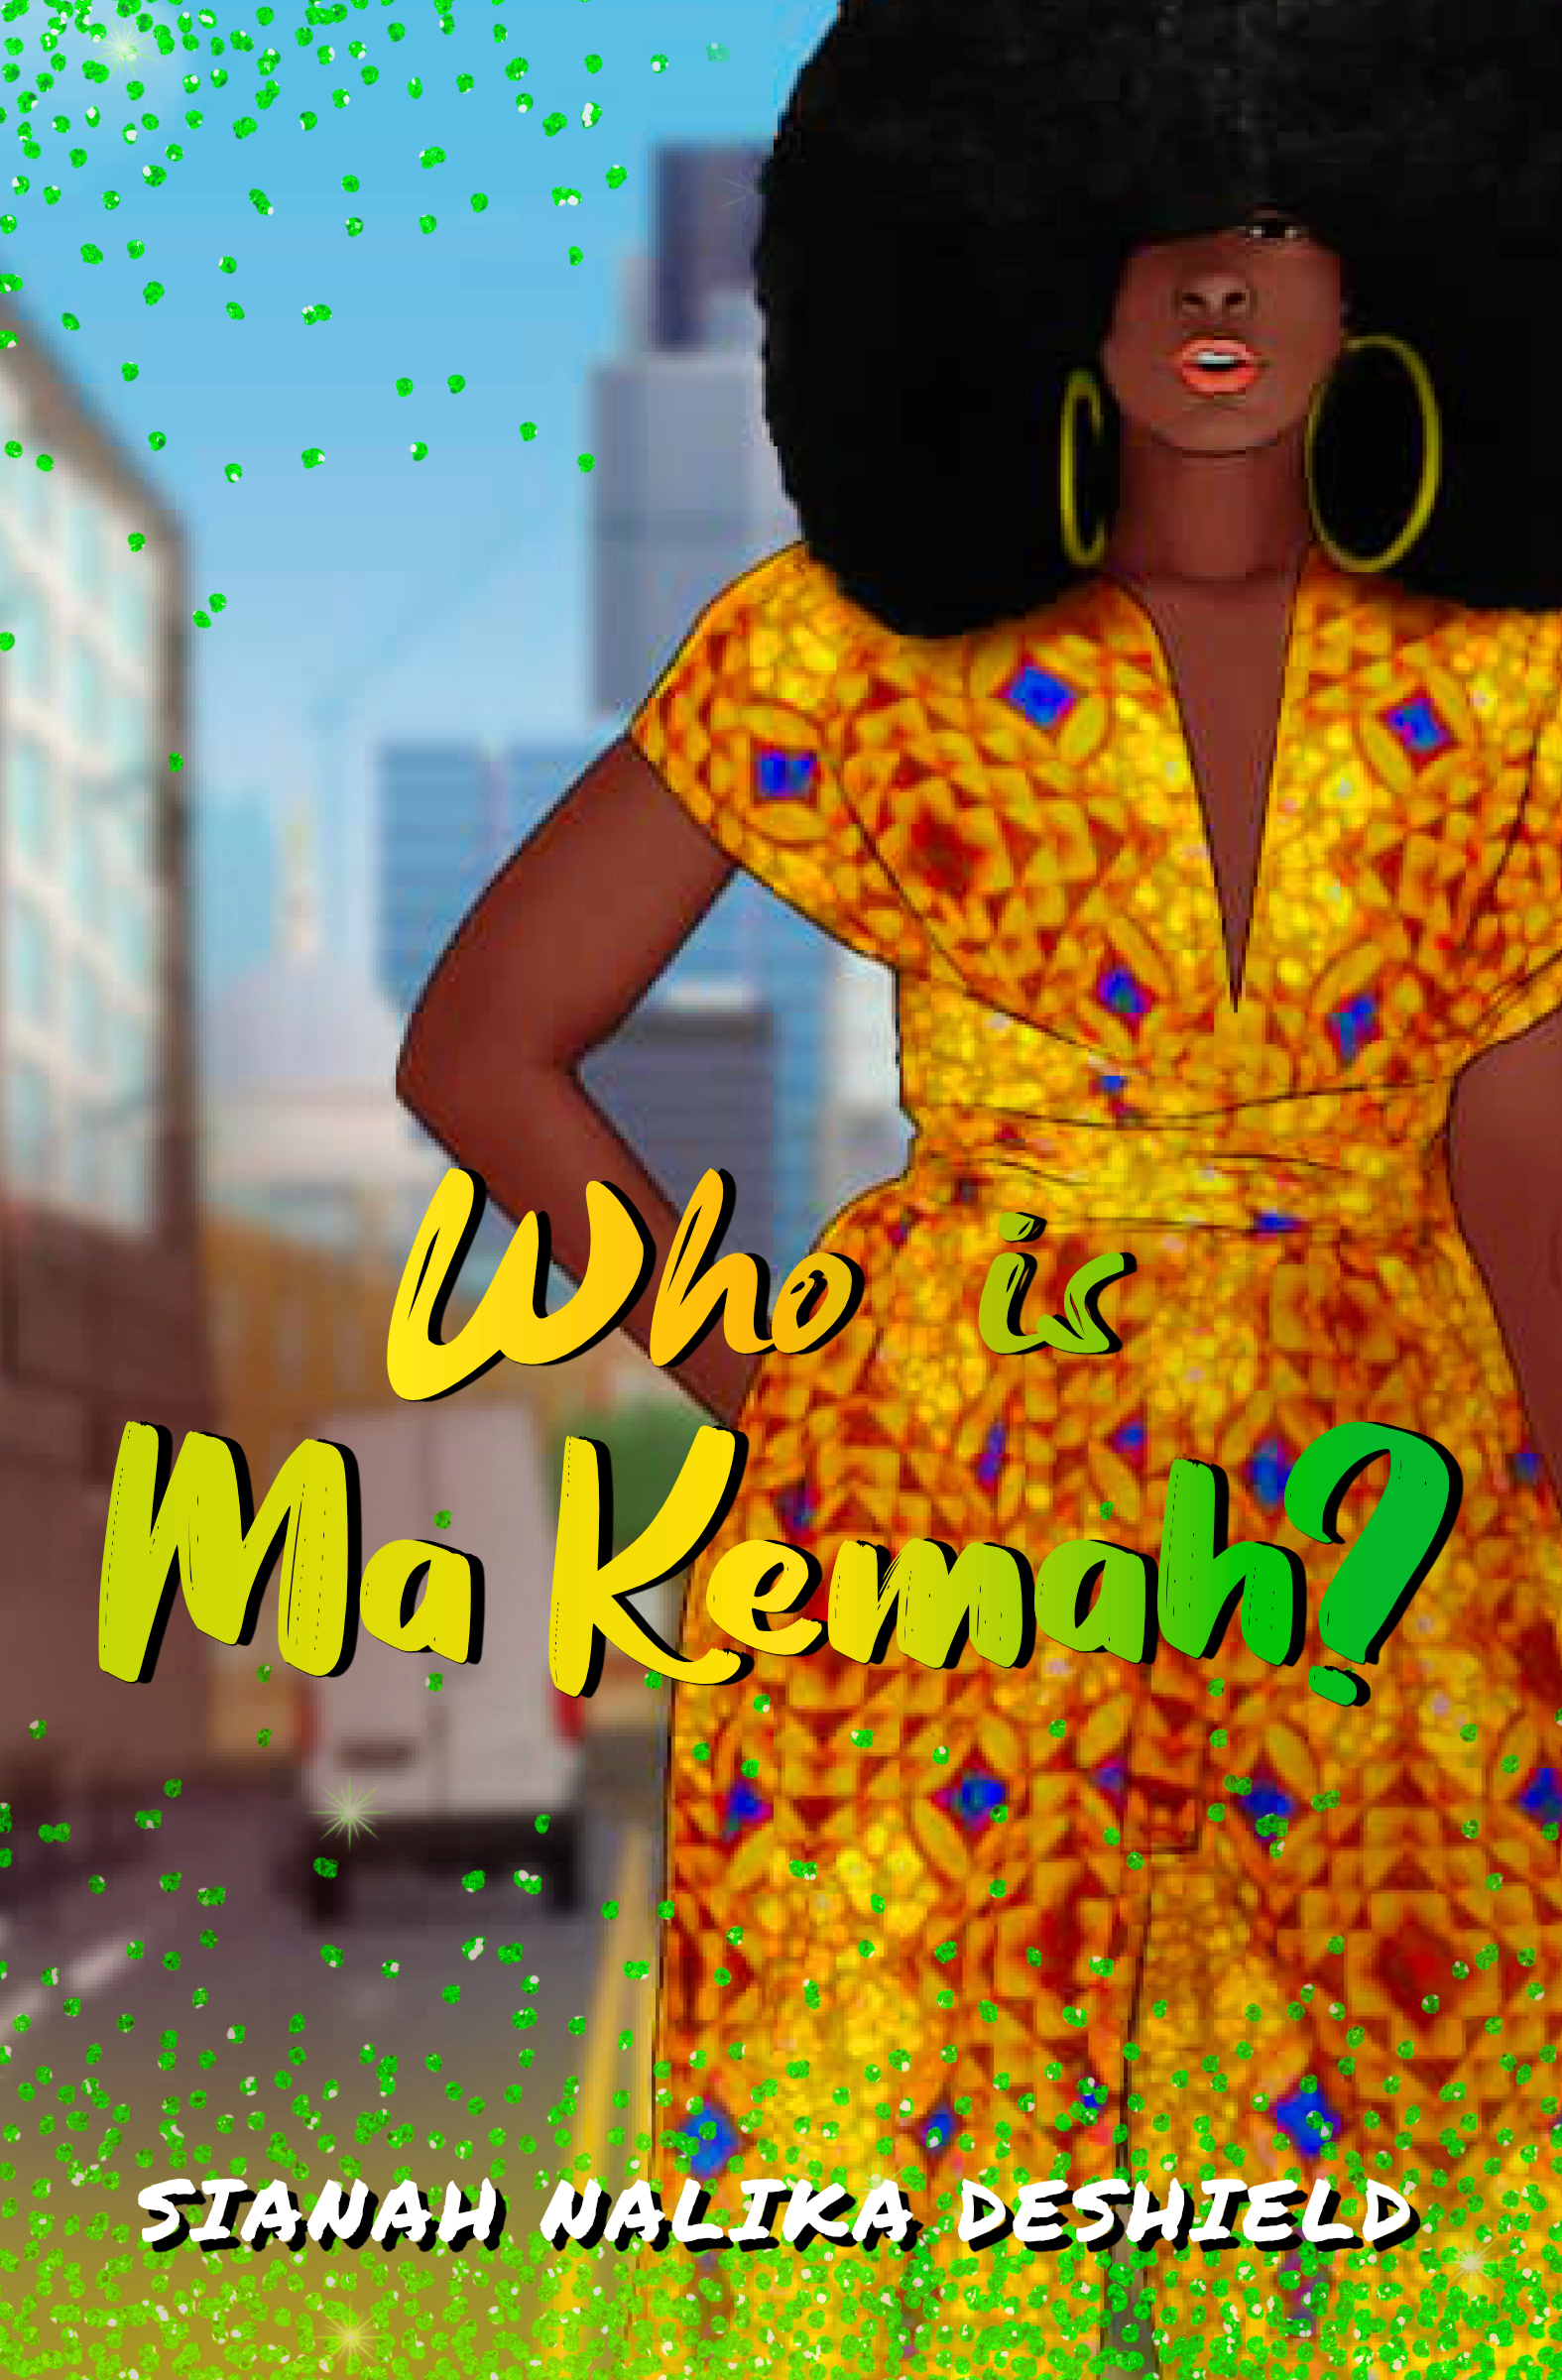 Who-is-Ma-Kemah-